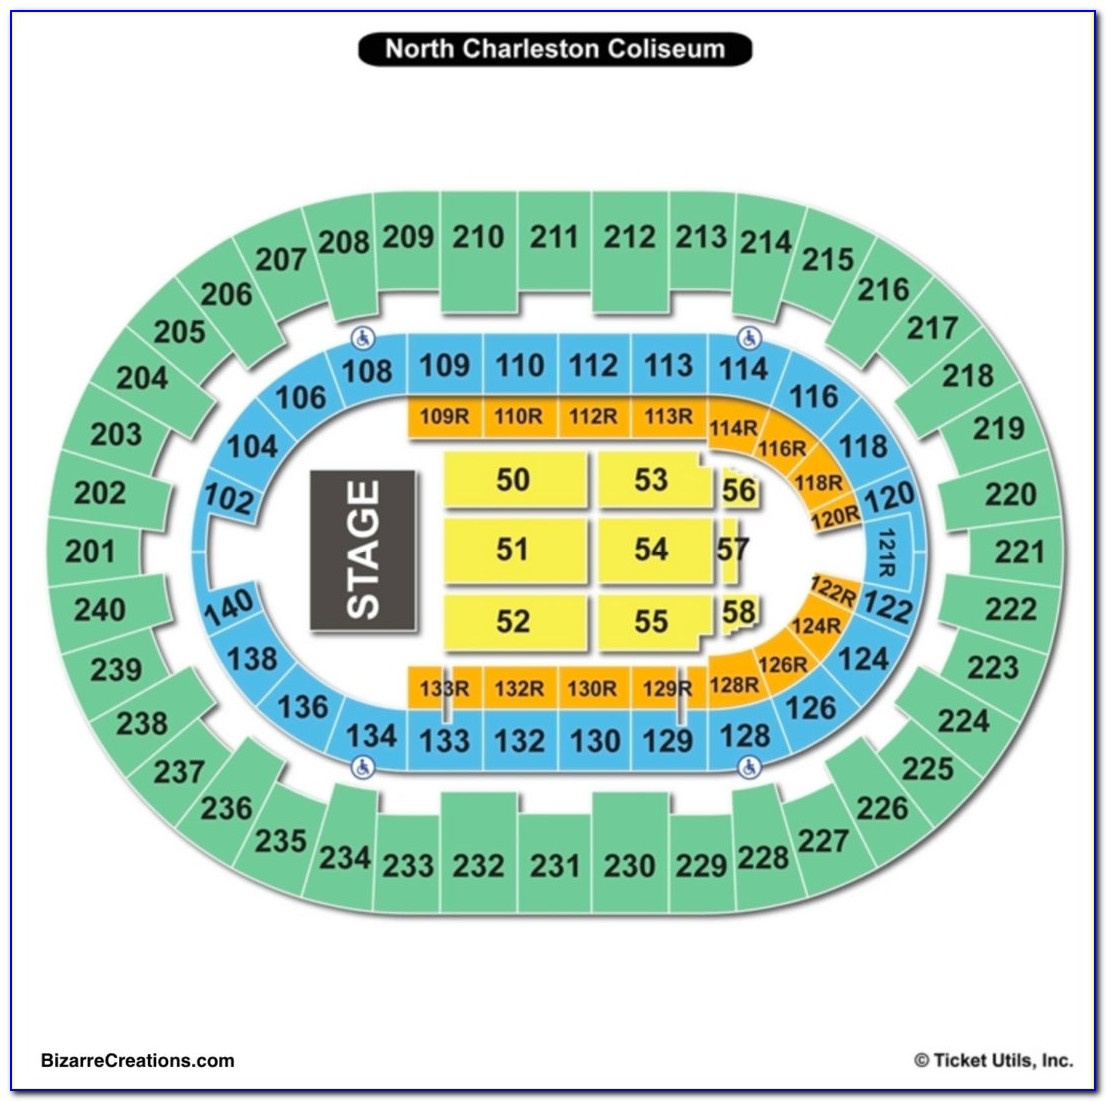 North Charleston Coliseum Seating Diagram